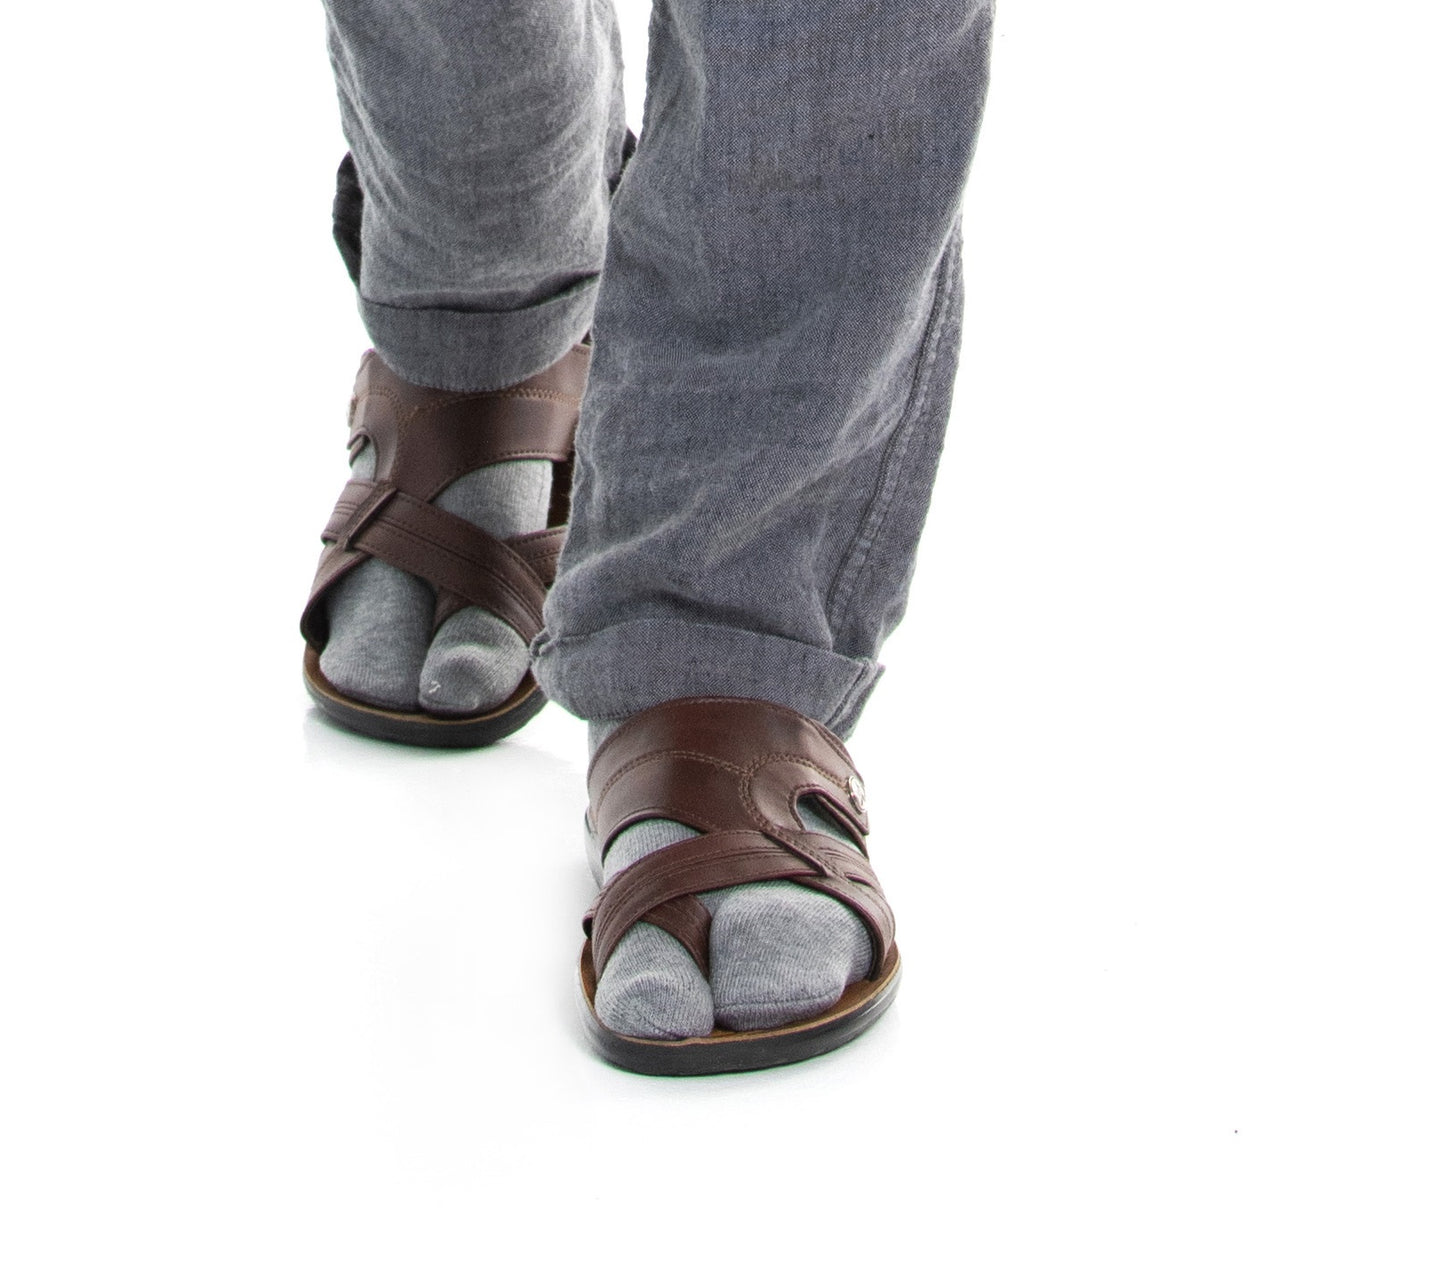 Mini-Crew - V-Toe Thicker Flip-Flop Tabi Socks Athletic or Casual Grey Cotton Blend Comfortable Stylish